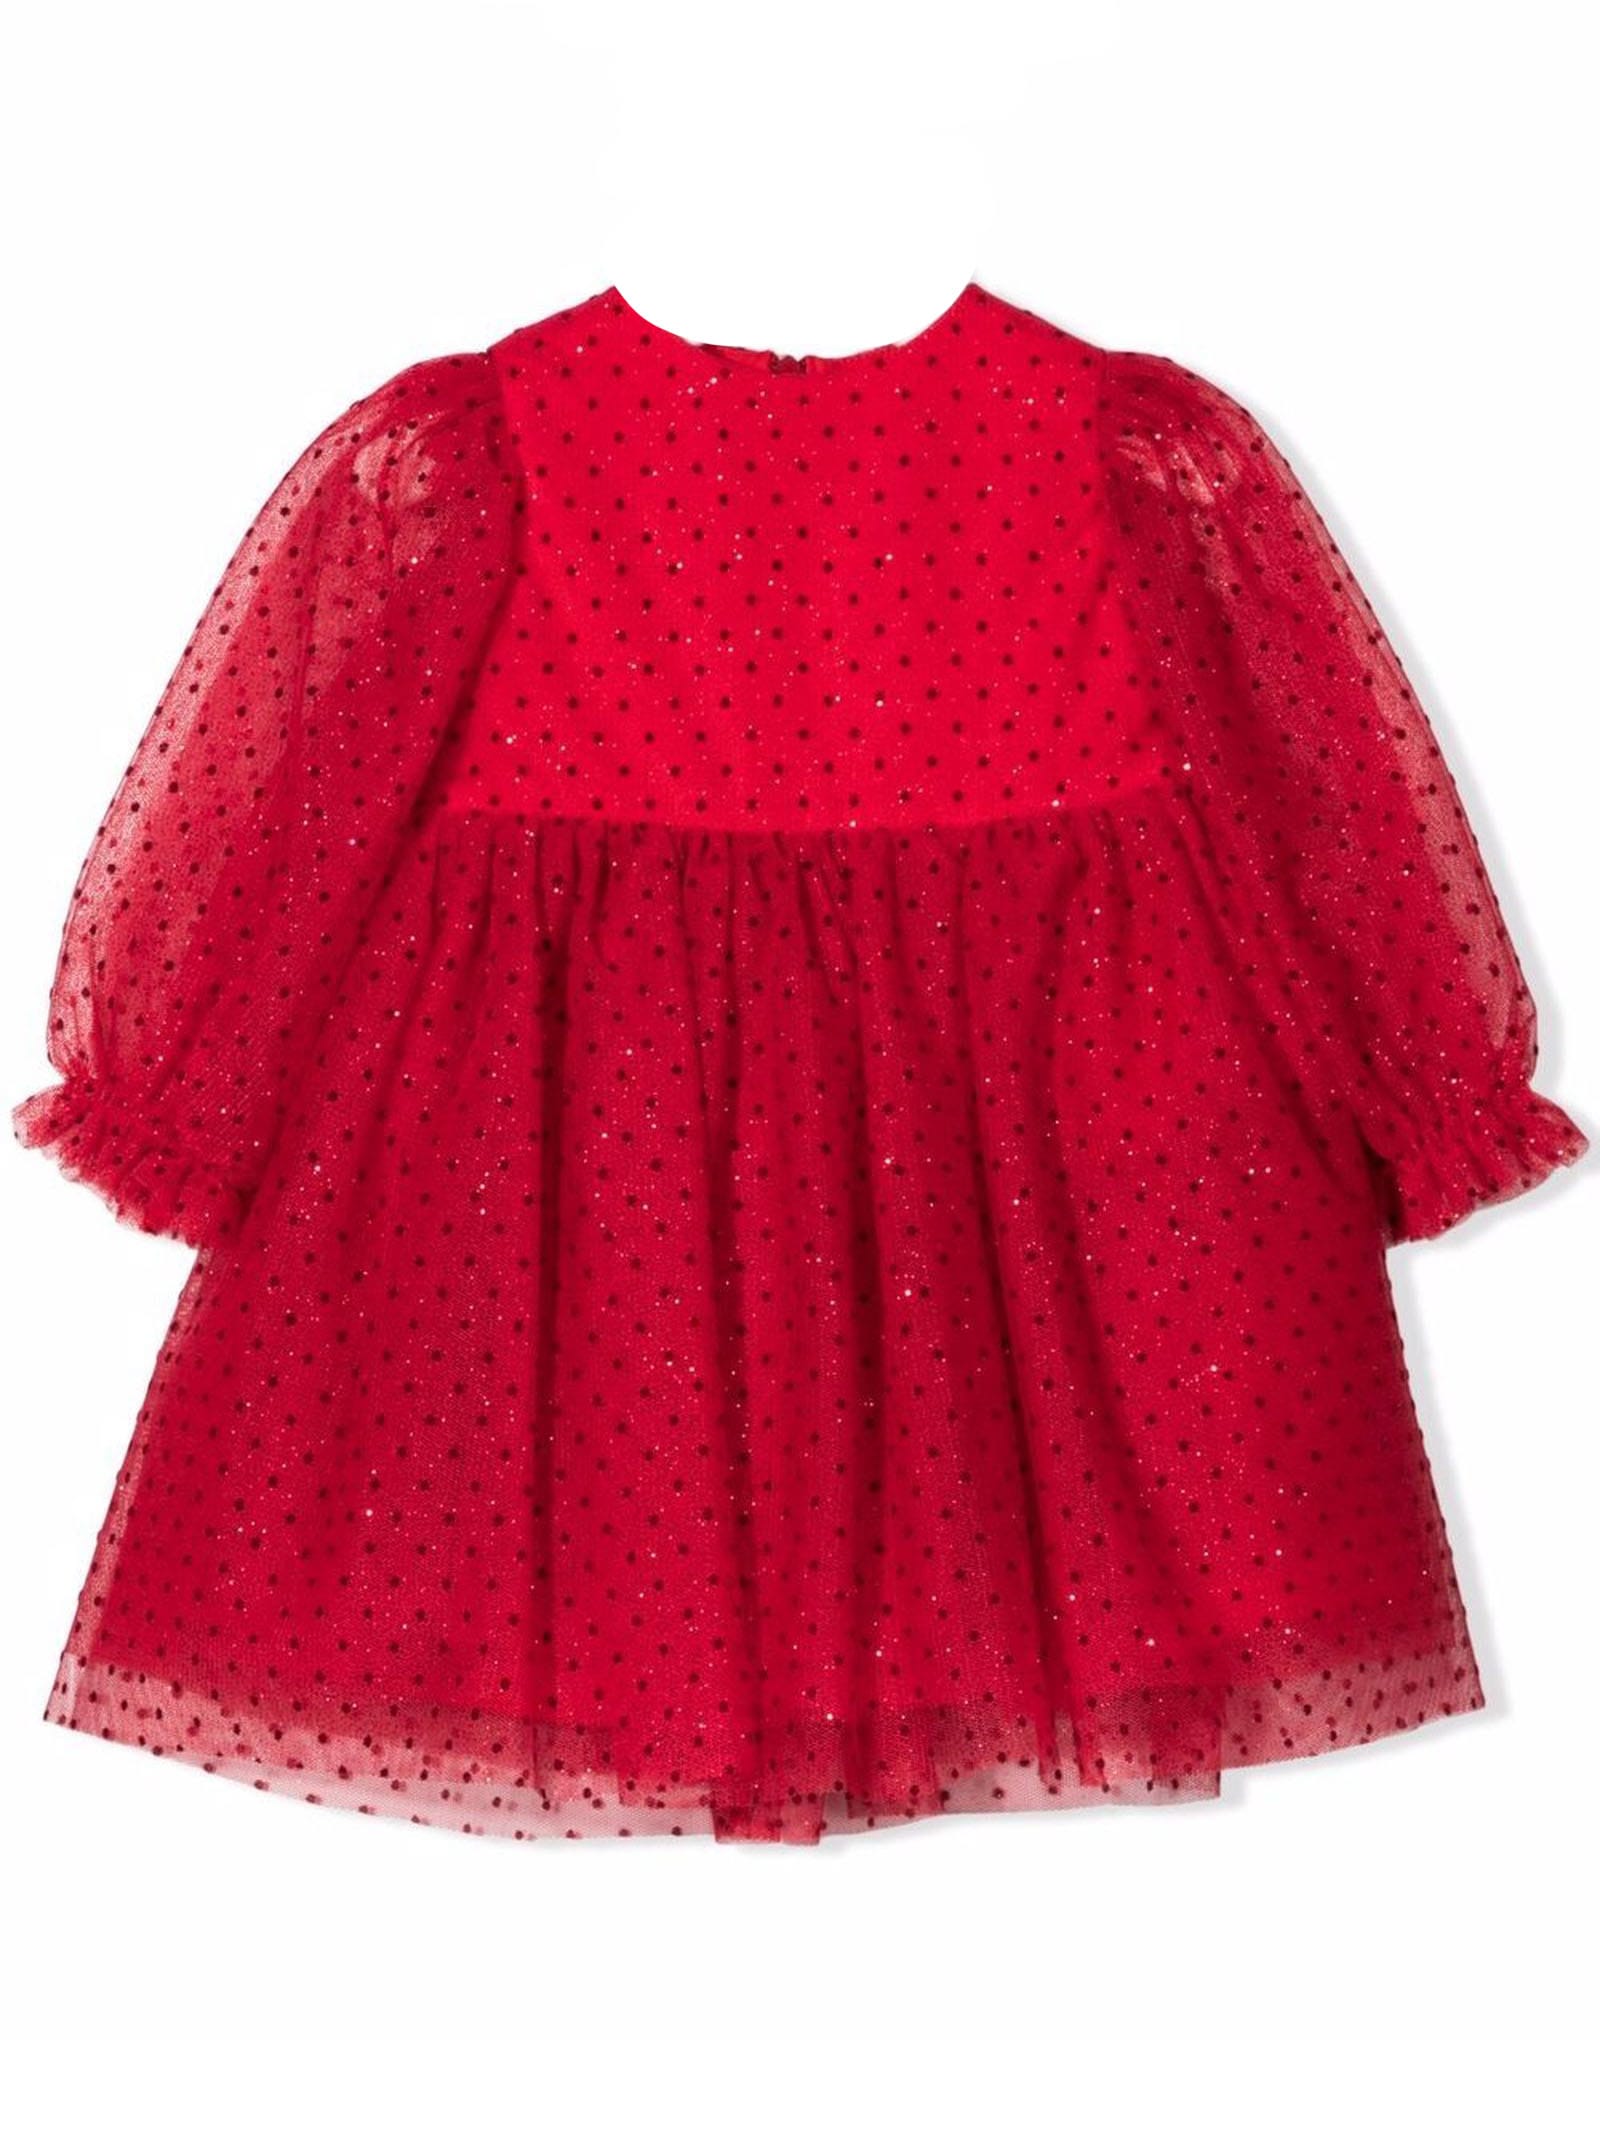 Simonetta Red Cotton Dress